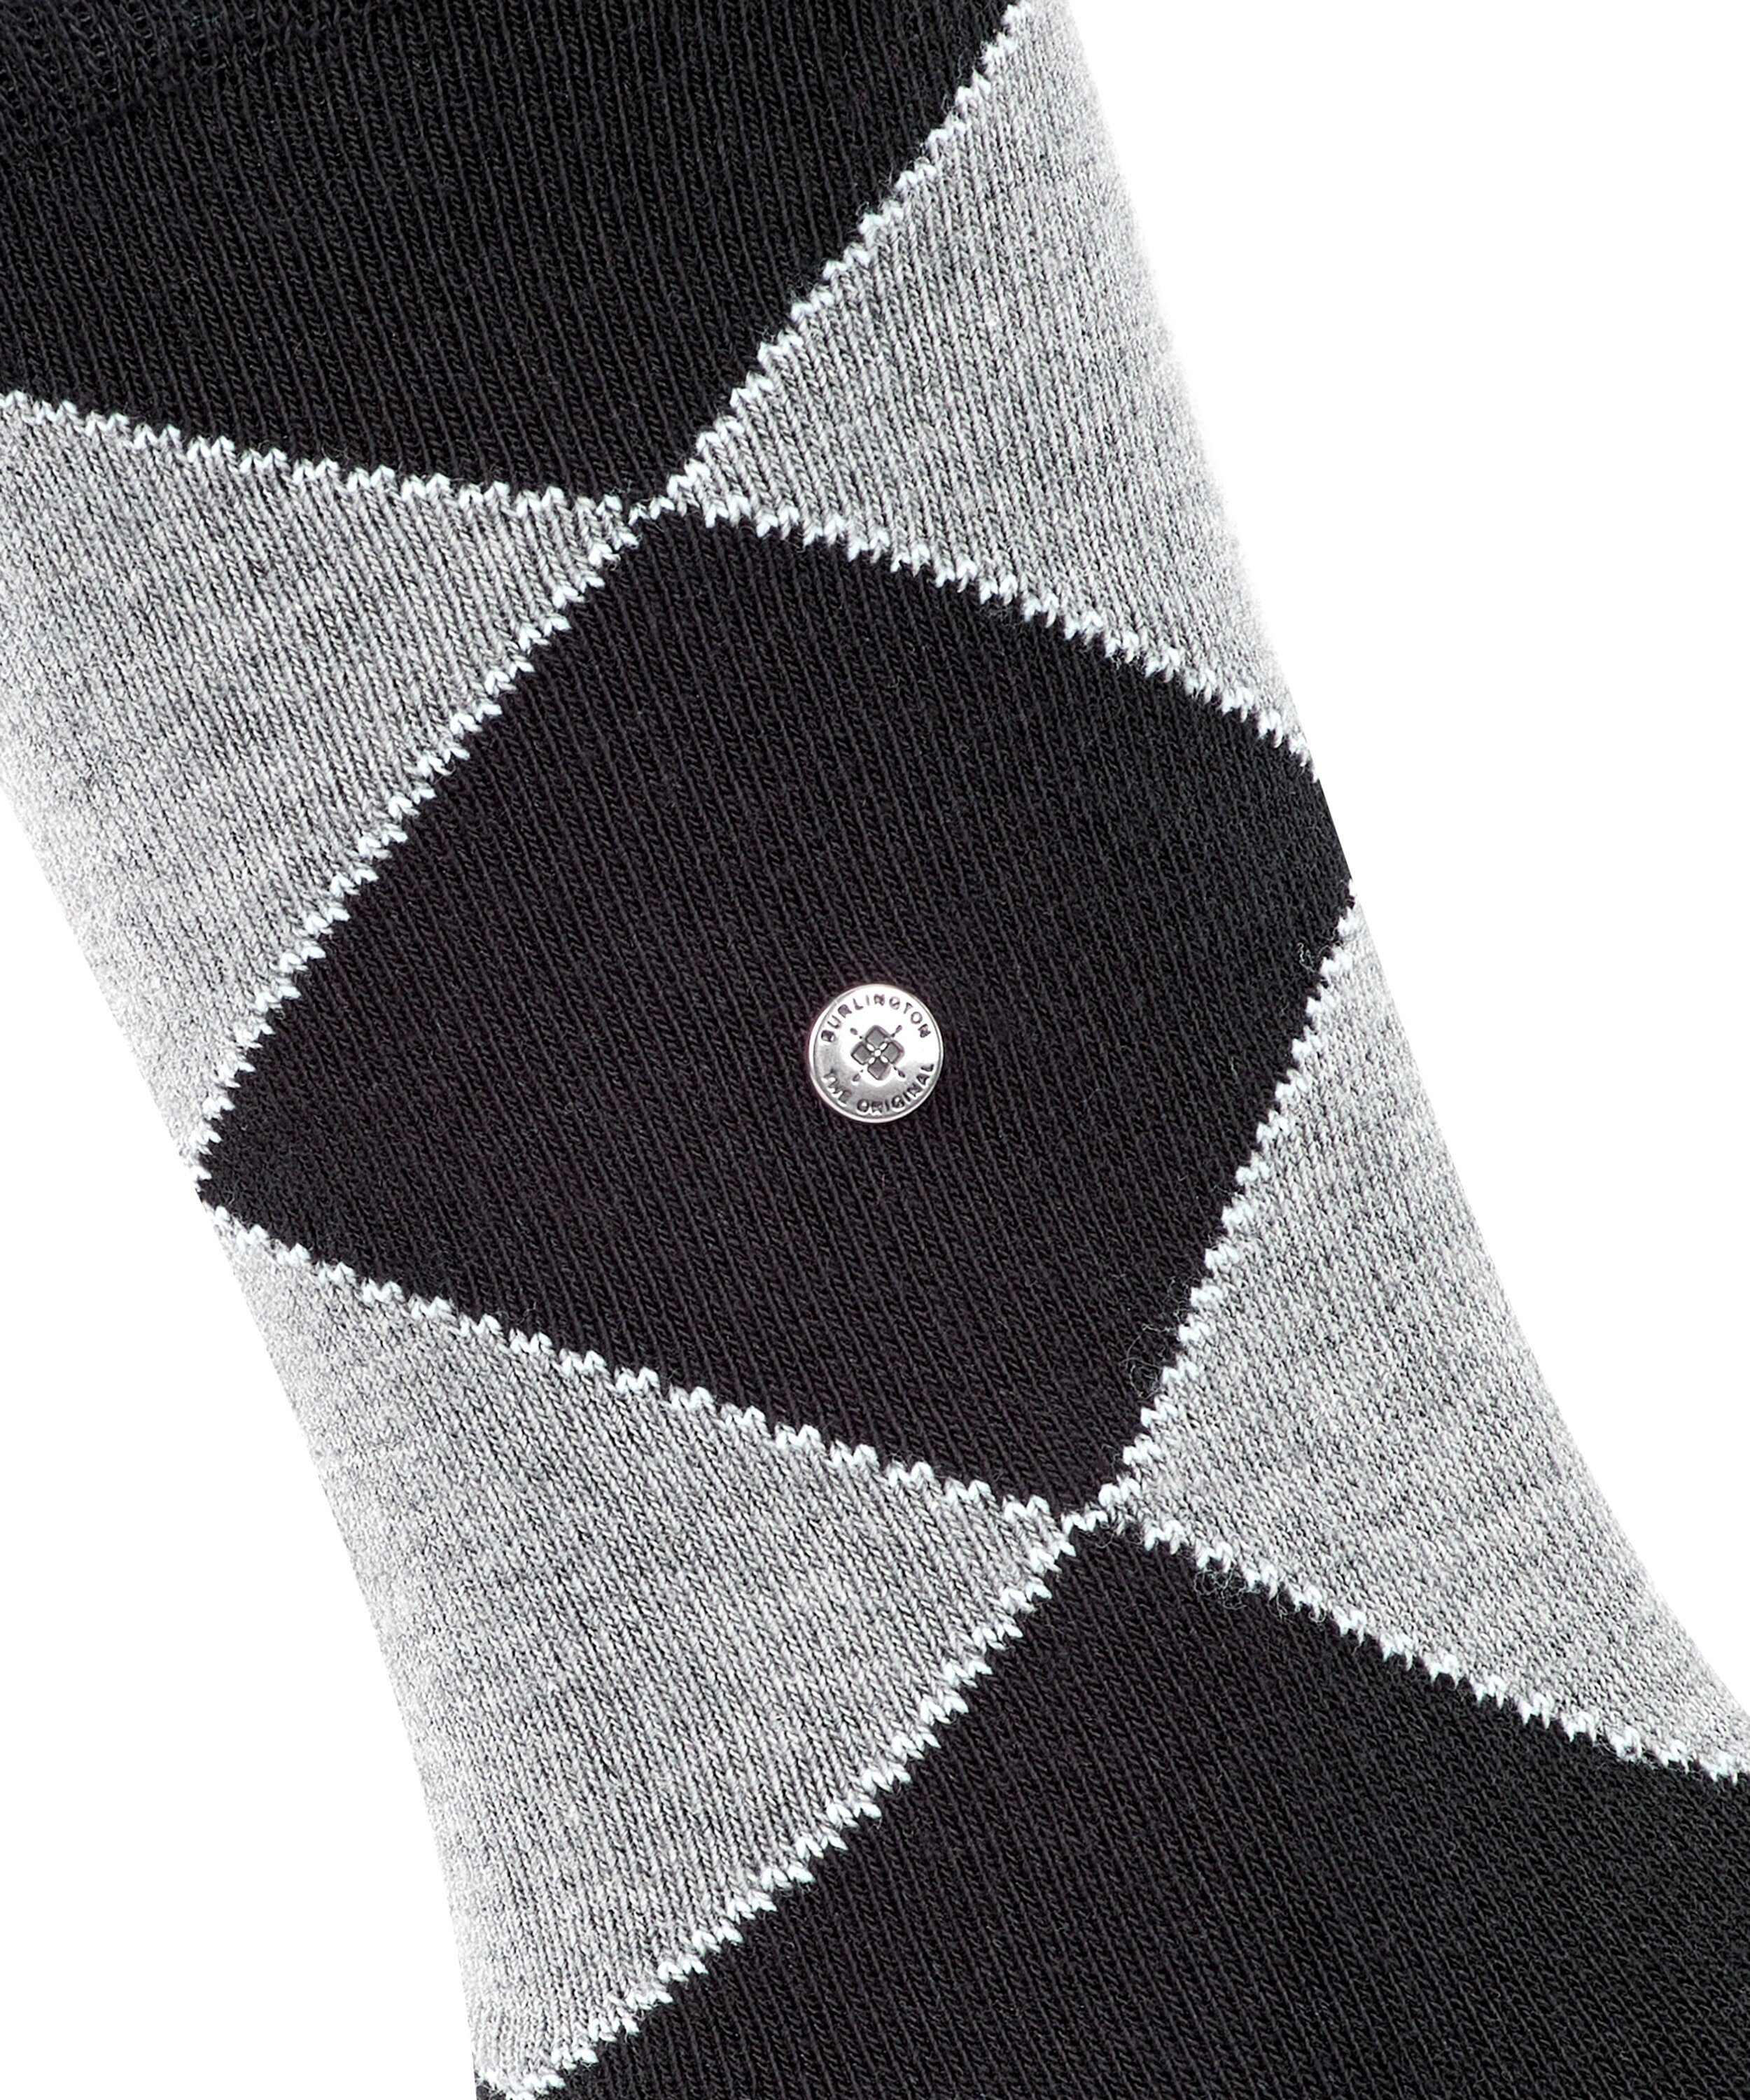 Socken Burlington Darlington (1-Paar) black (3000)